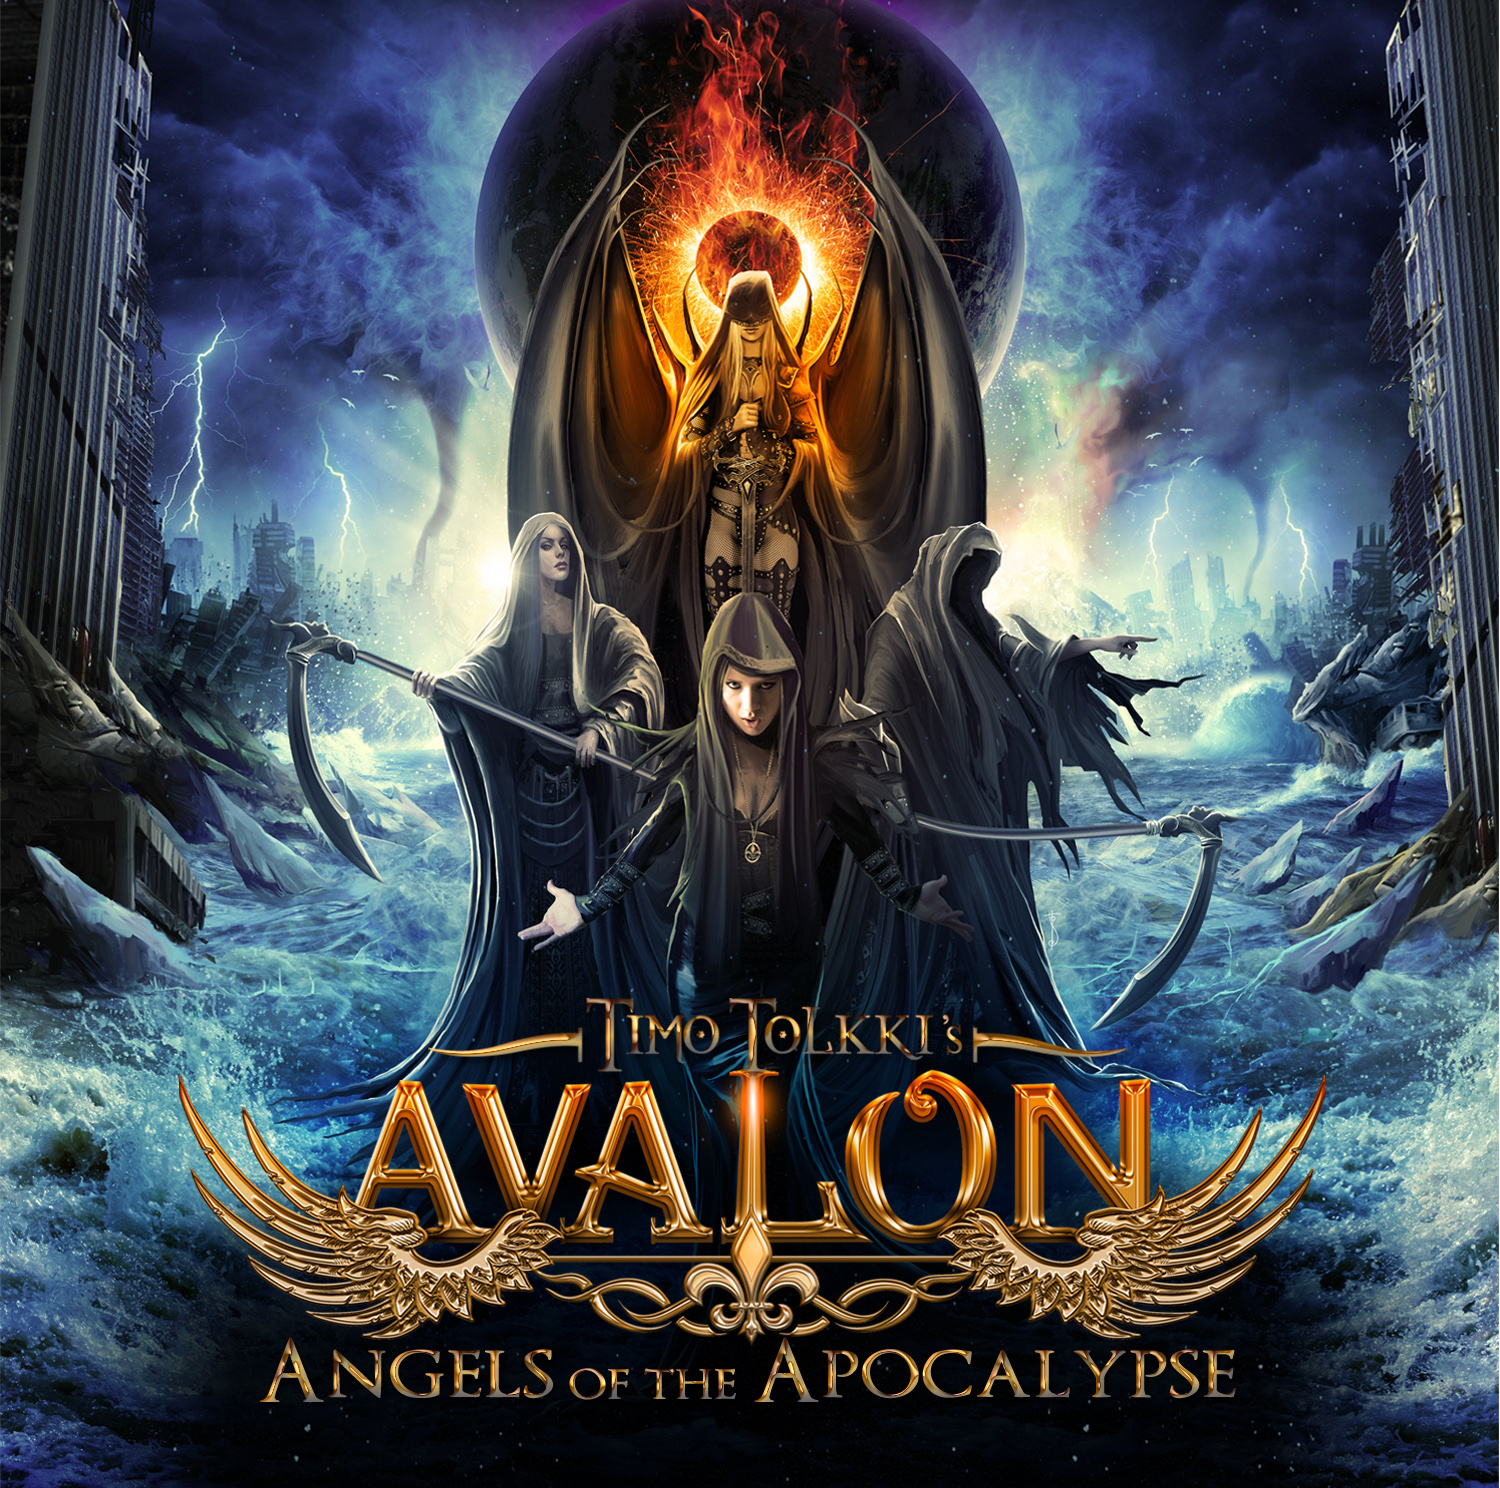 Timo Tolkki’s Avalon - Angels of the Apocalypse